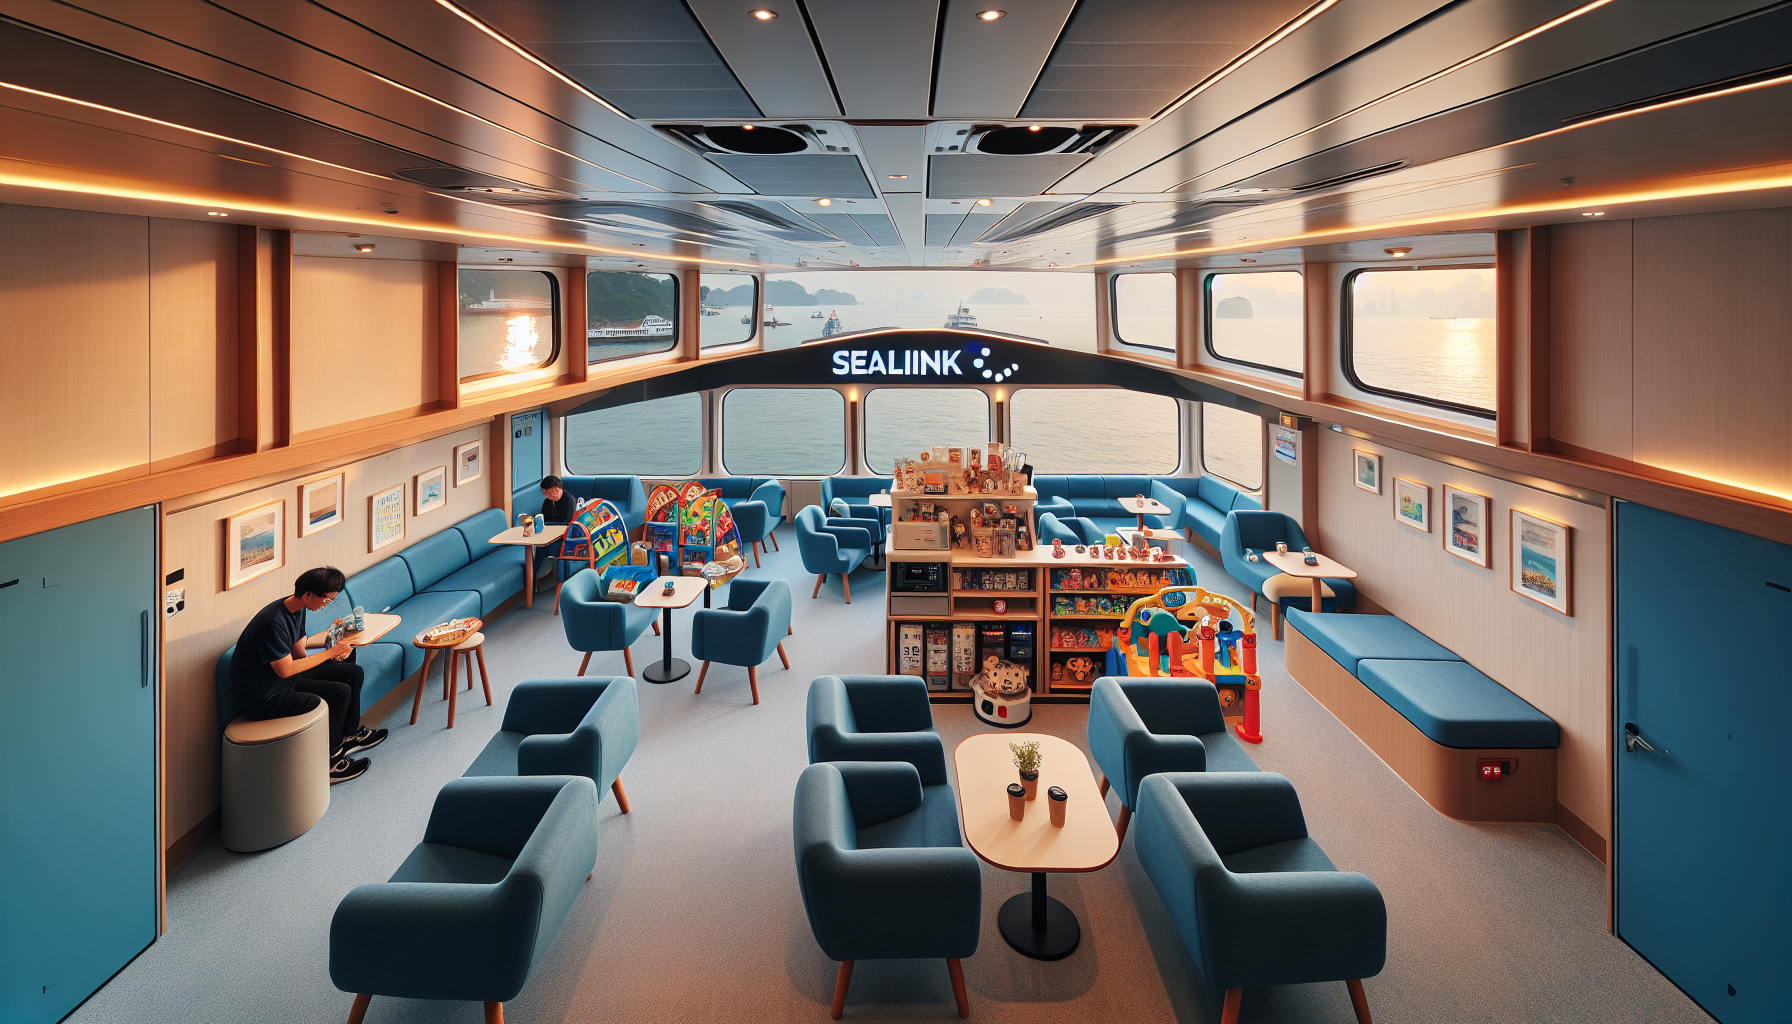 Onboard Amenities and Facilities of SeaLink Ferries